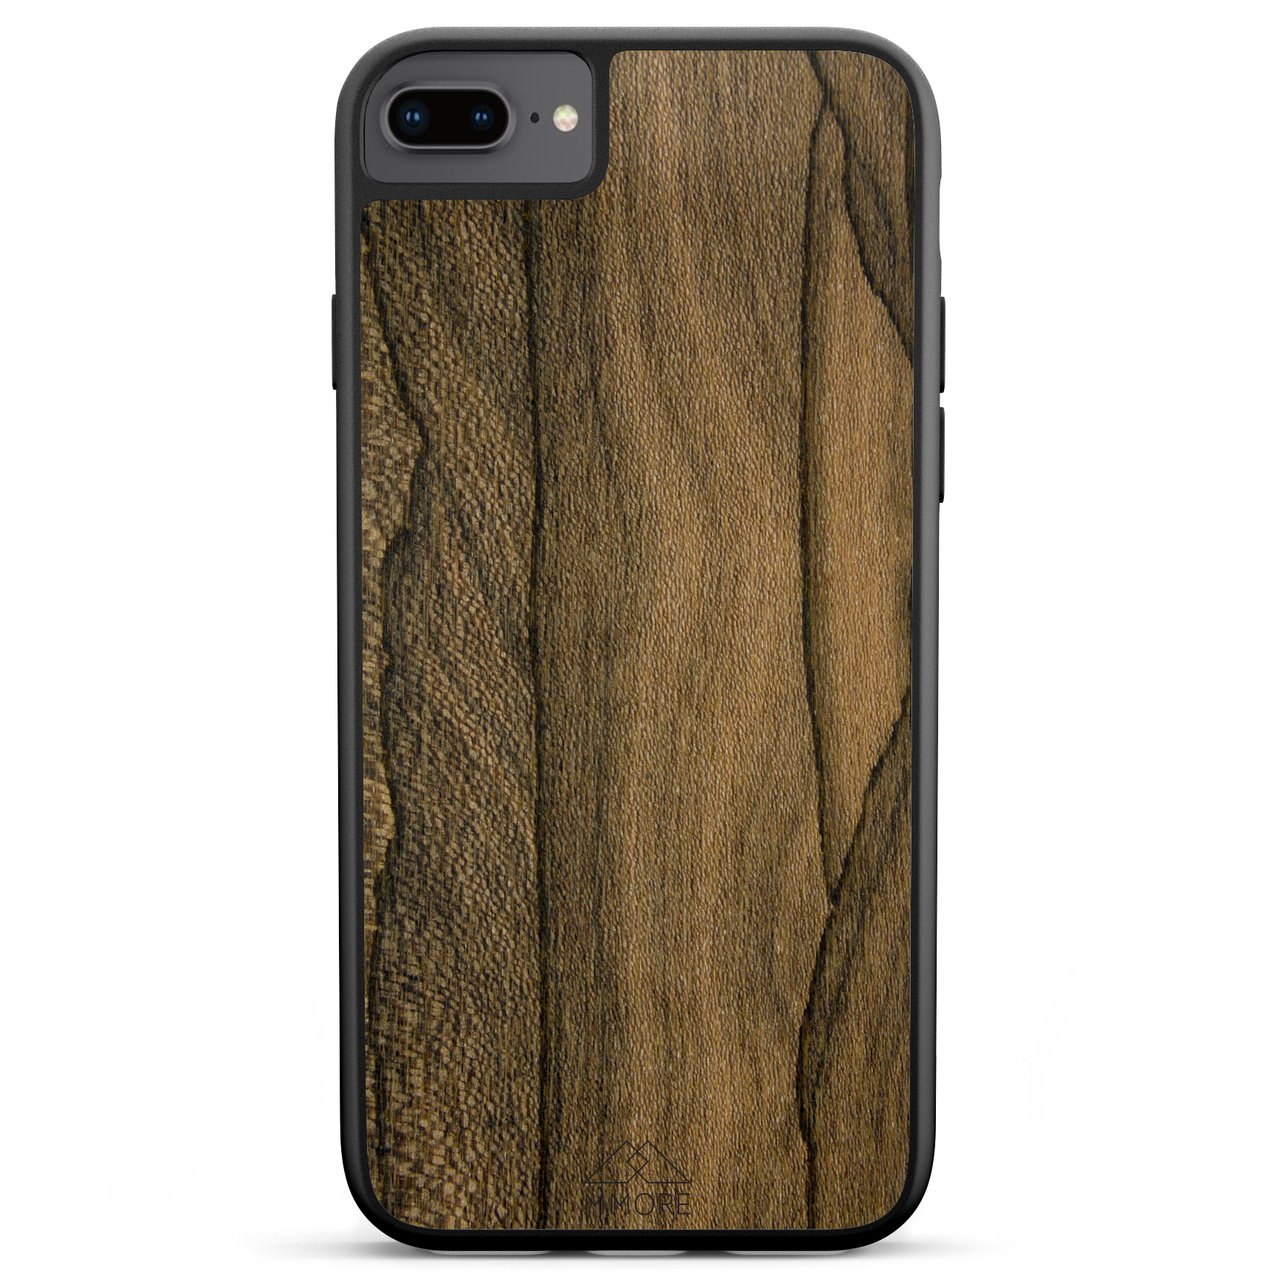 iPhone 7 Plus Ziricote Wood Phone Case